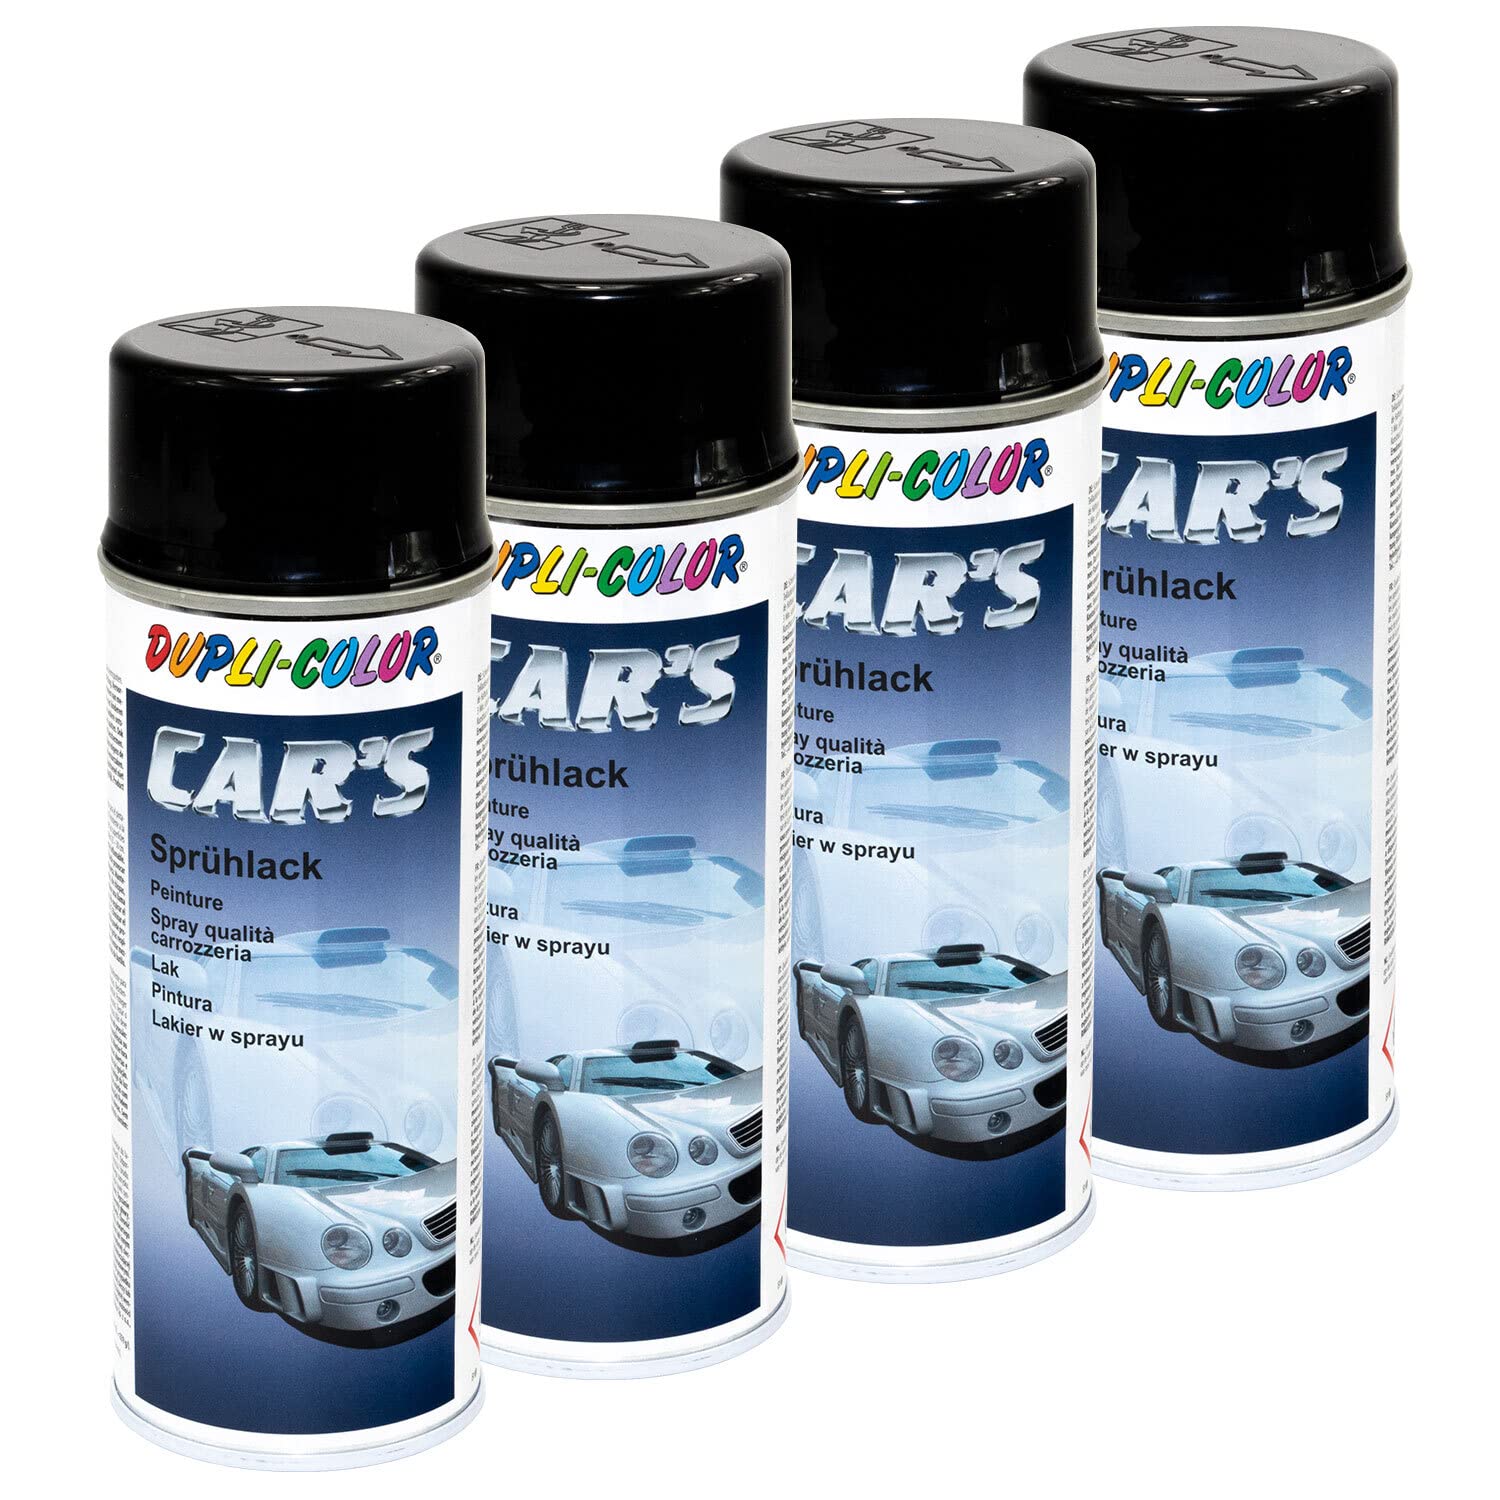 Lackspray Spraydose Sprühlack Cars Dupli Color 385865 schwarz glänzend 4 X 400 ml von DUPLI_bundle